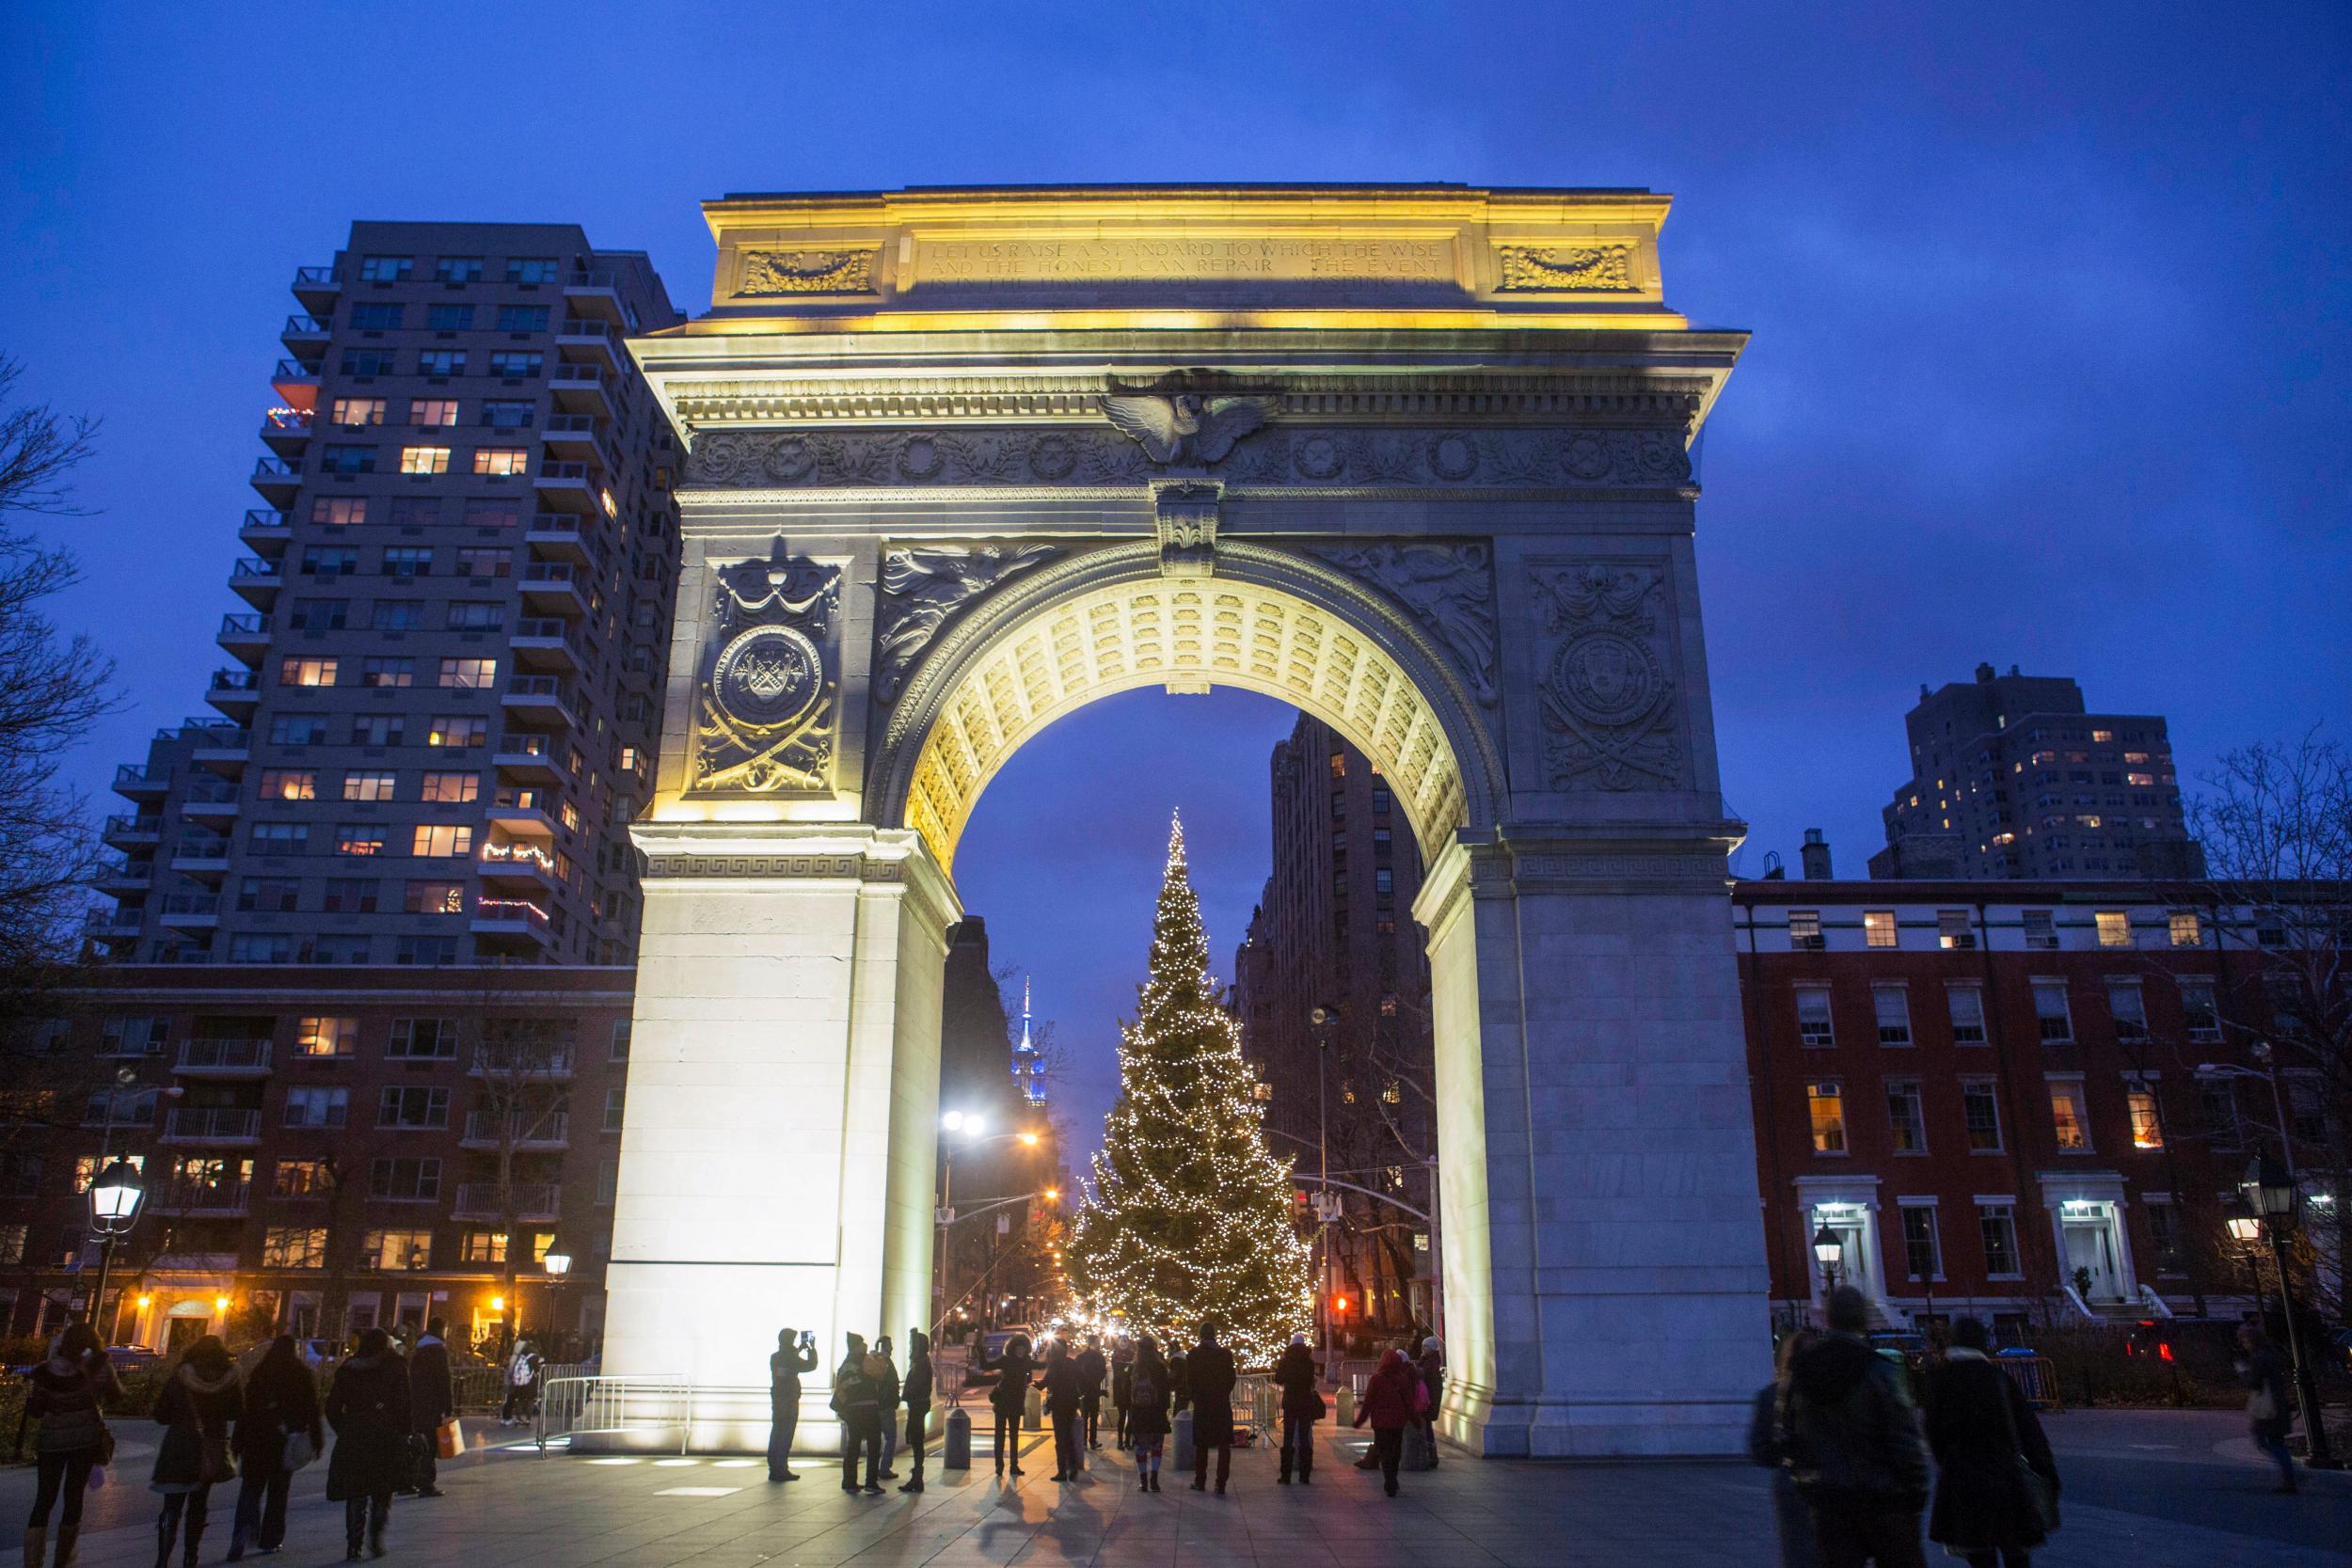 The Christmas tree at Washington Square Park